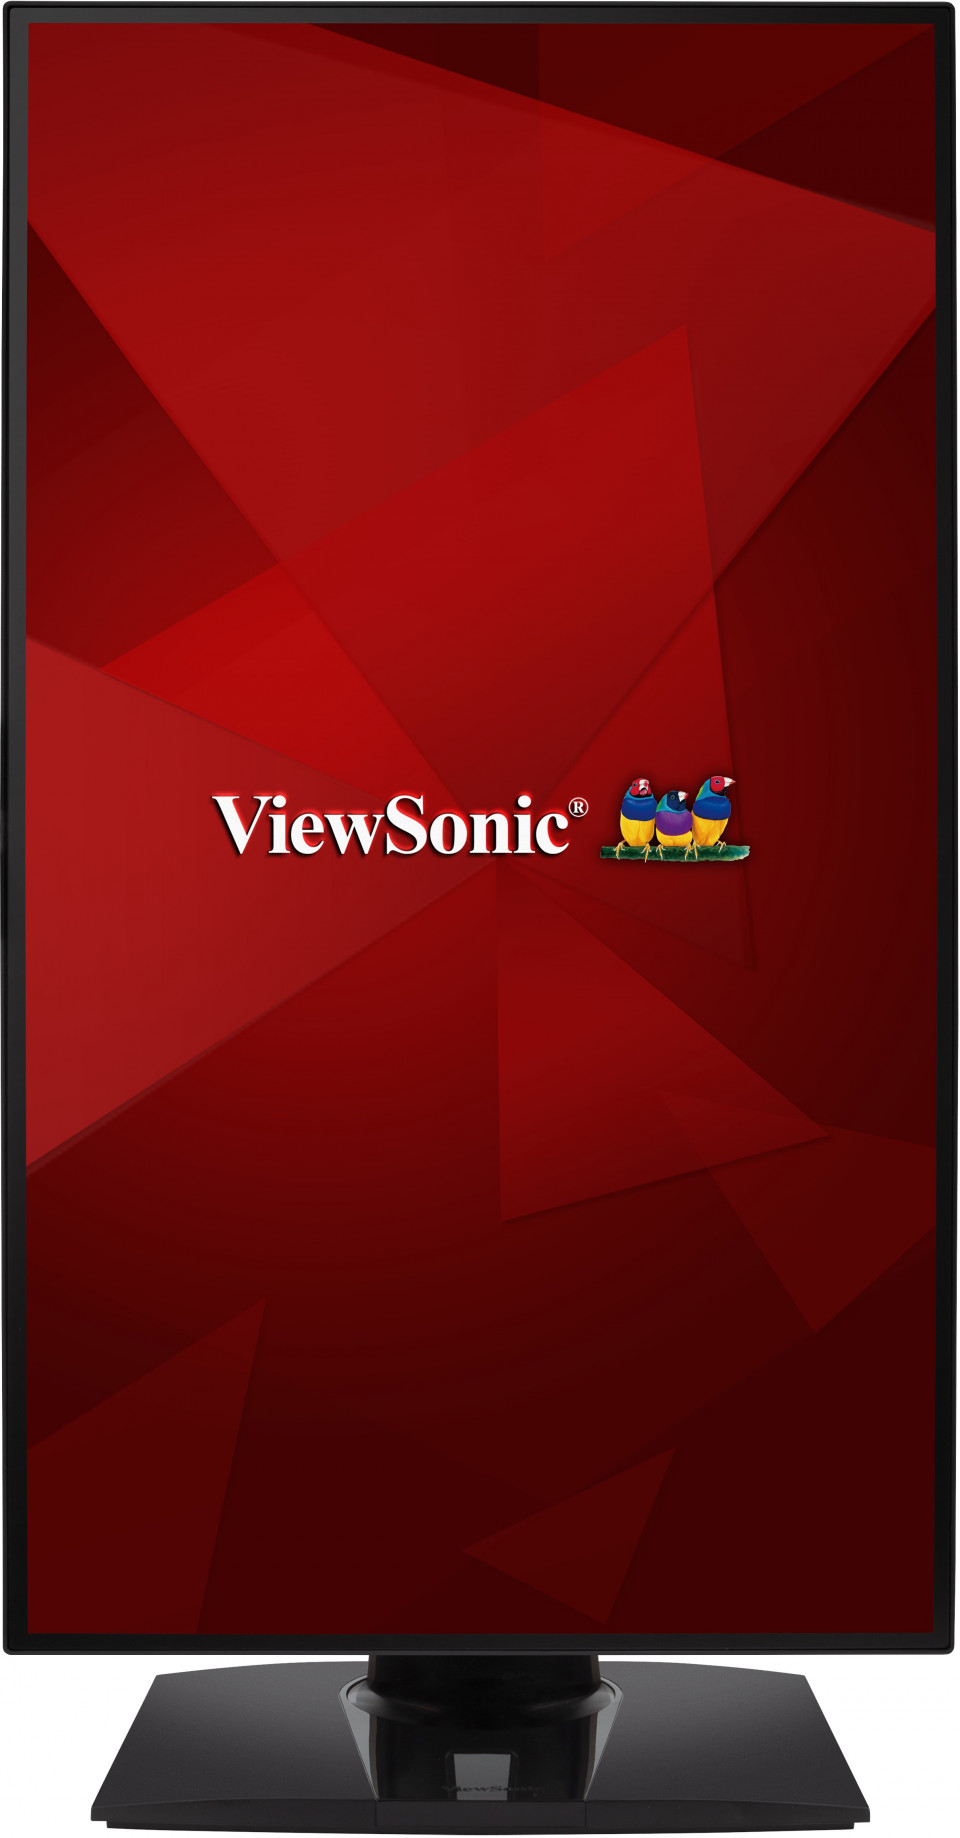 ViewSonic Display VP2768A